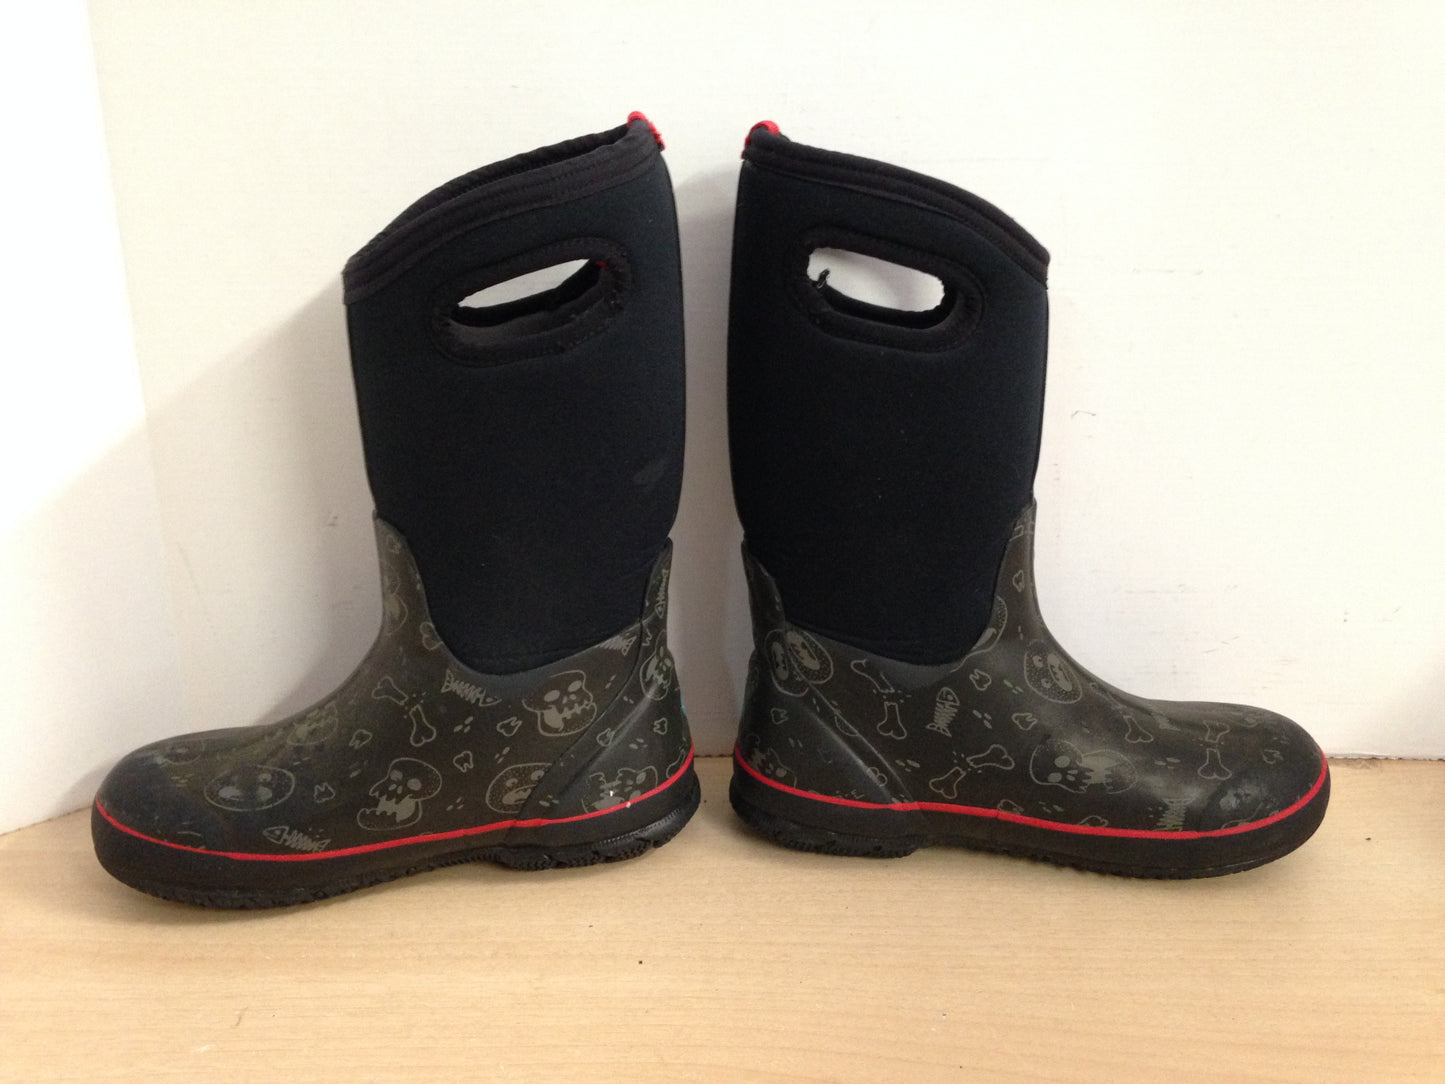 Bogs Brand Child Size 4 Black Grey -30 Degree Neoprene Rubber Rain Winter Snow Waterproof Boots